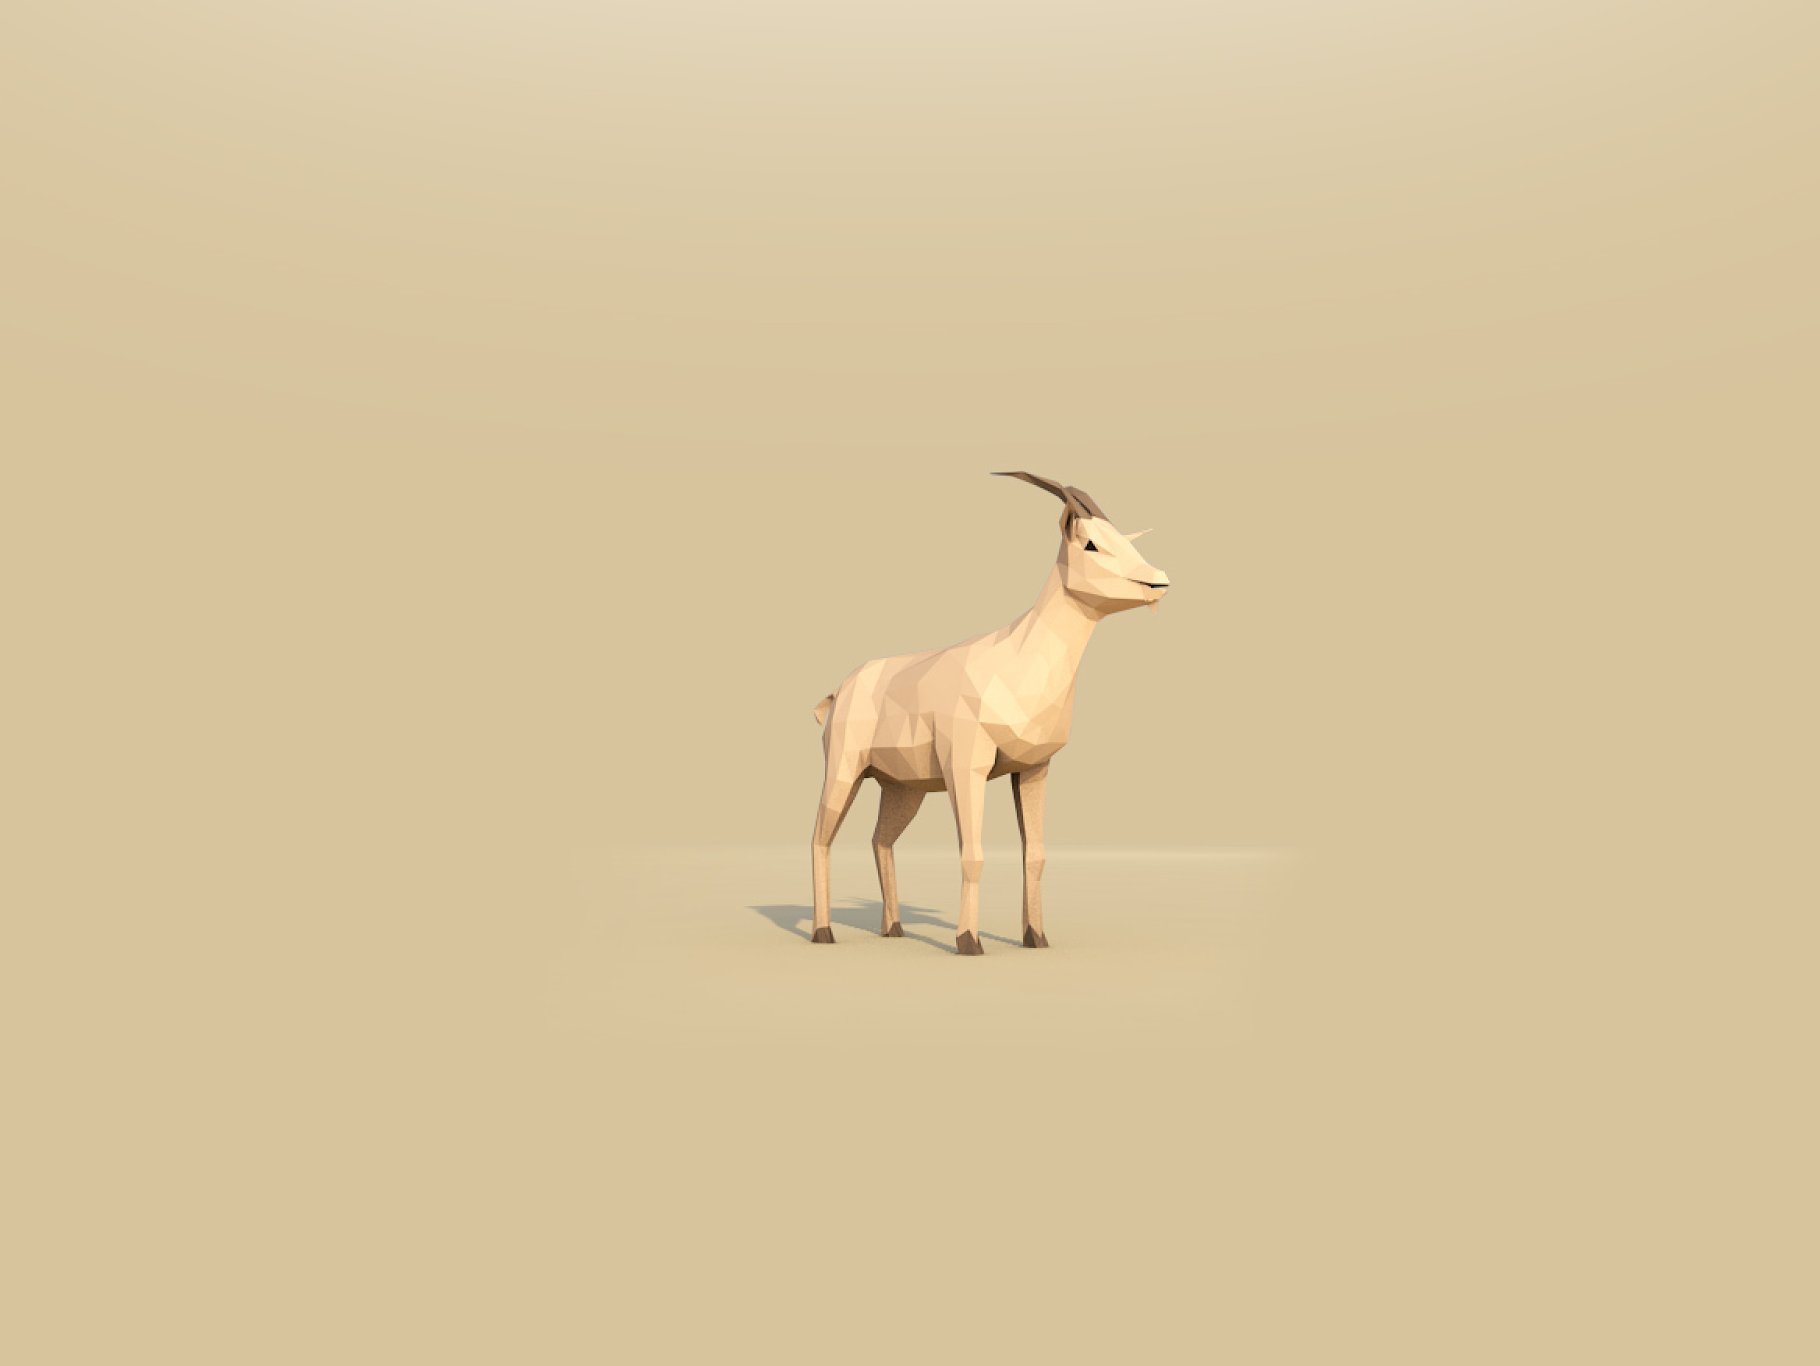 Colorful goat mockup on a beige background.